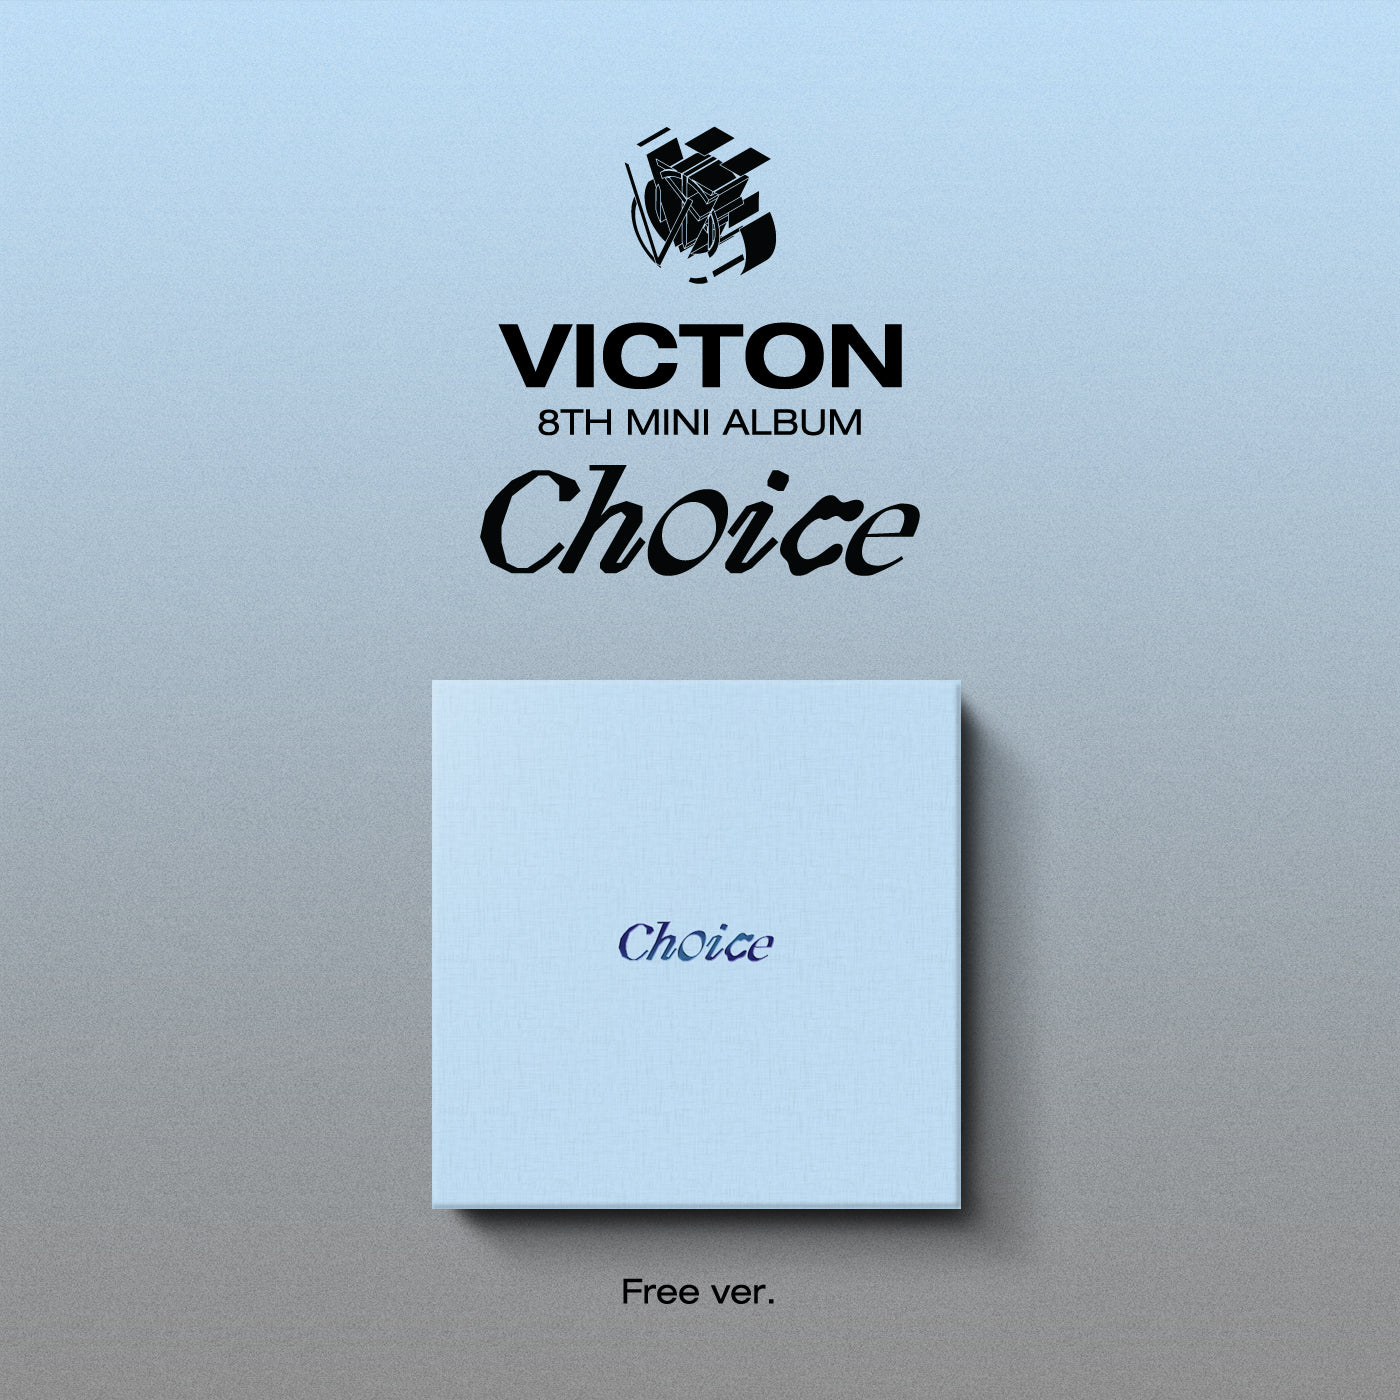 VICTON 8TH MINI ALBUM 'CHOICE' FREE VERSION COVER